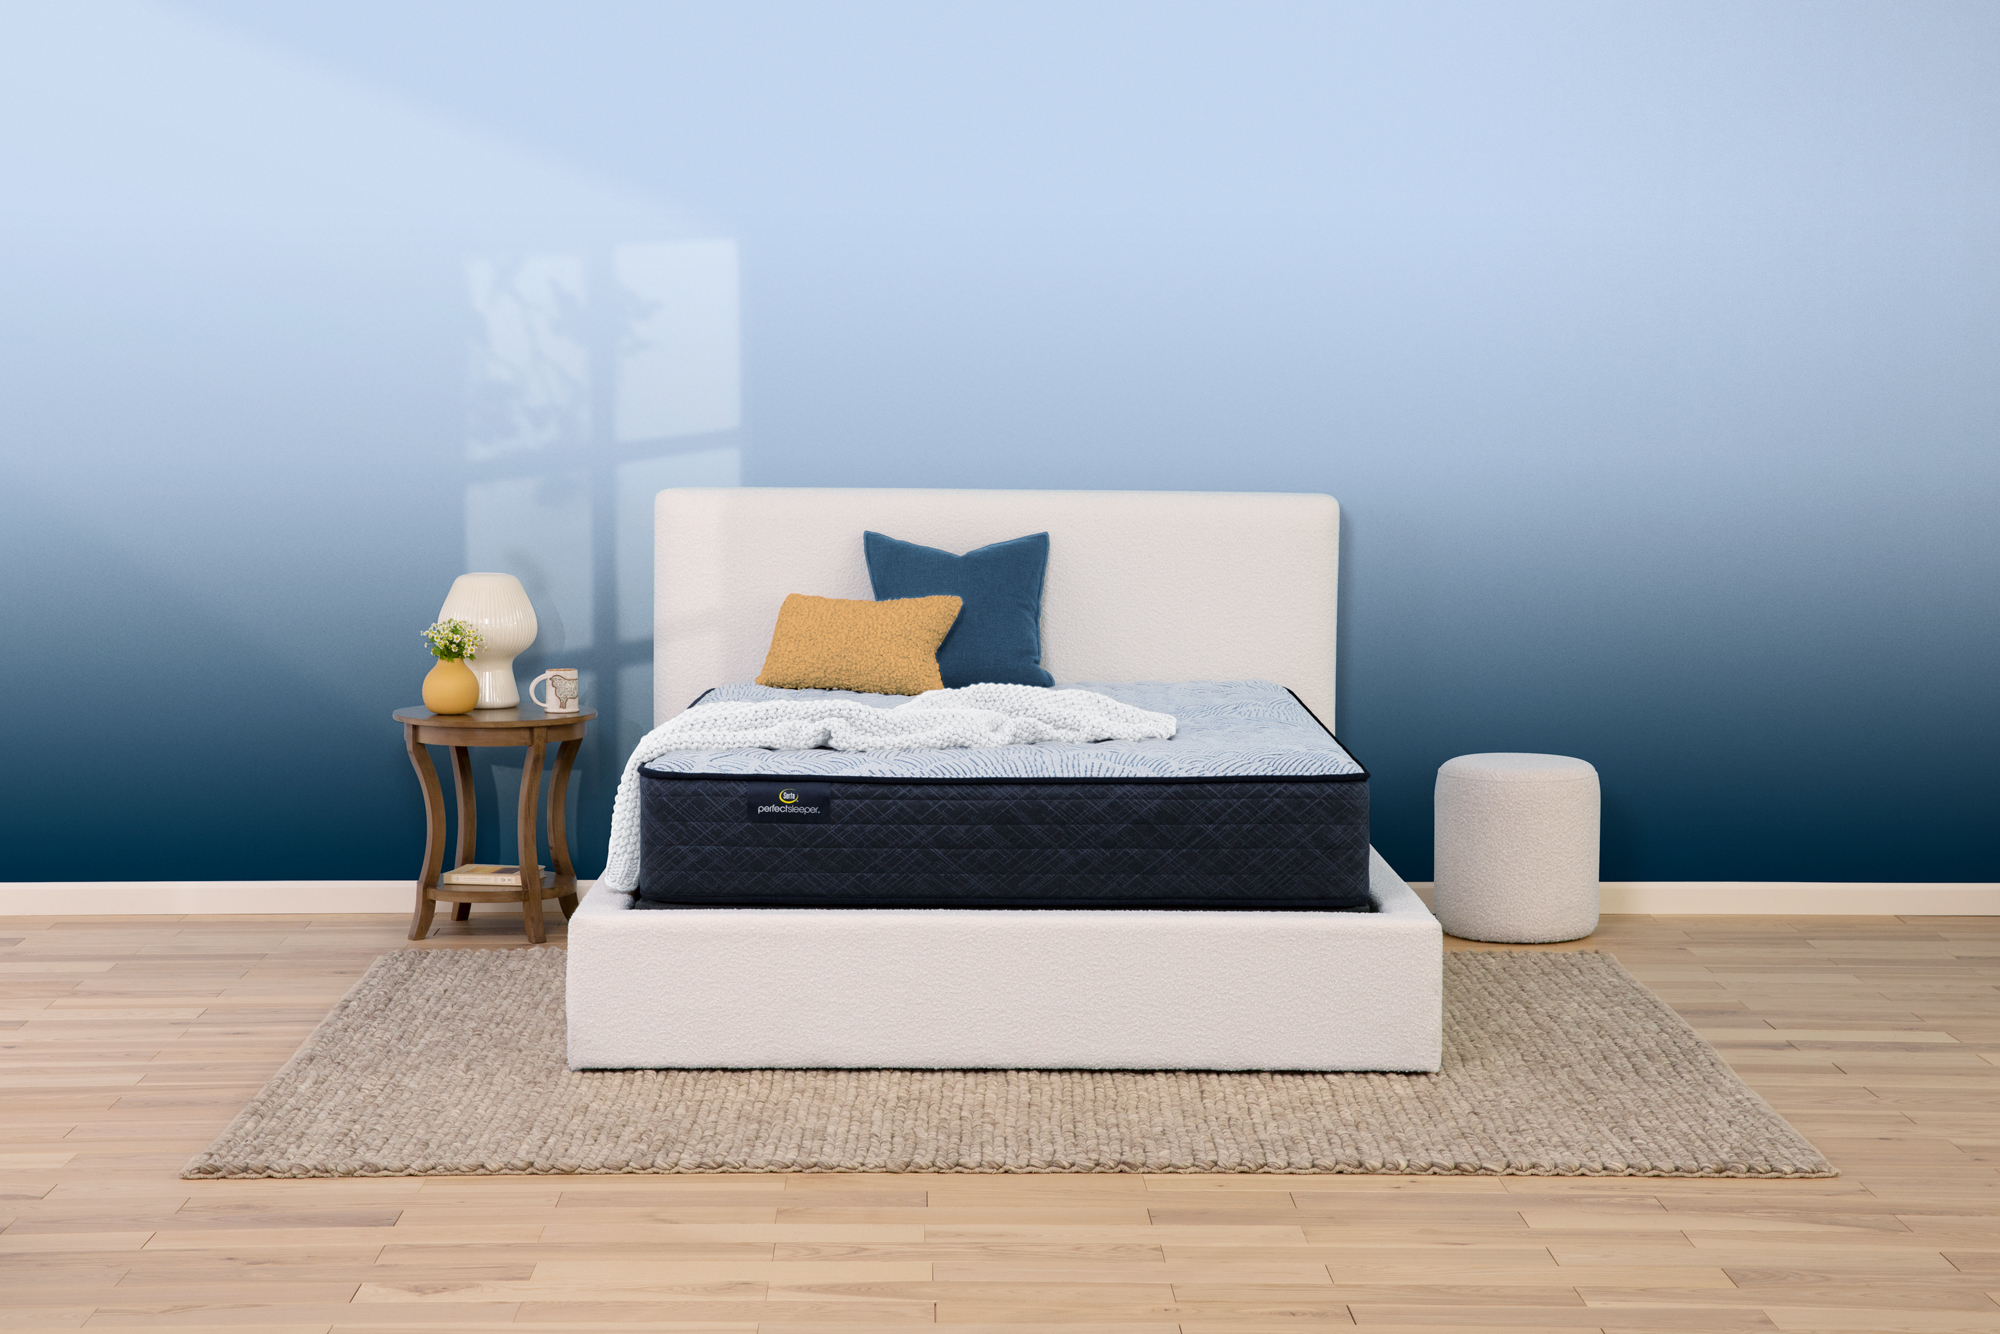 Photo of the Serta Perfect Sleeper Blue Lagoon Nights Firm mattress.